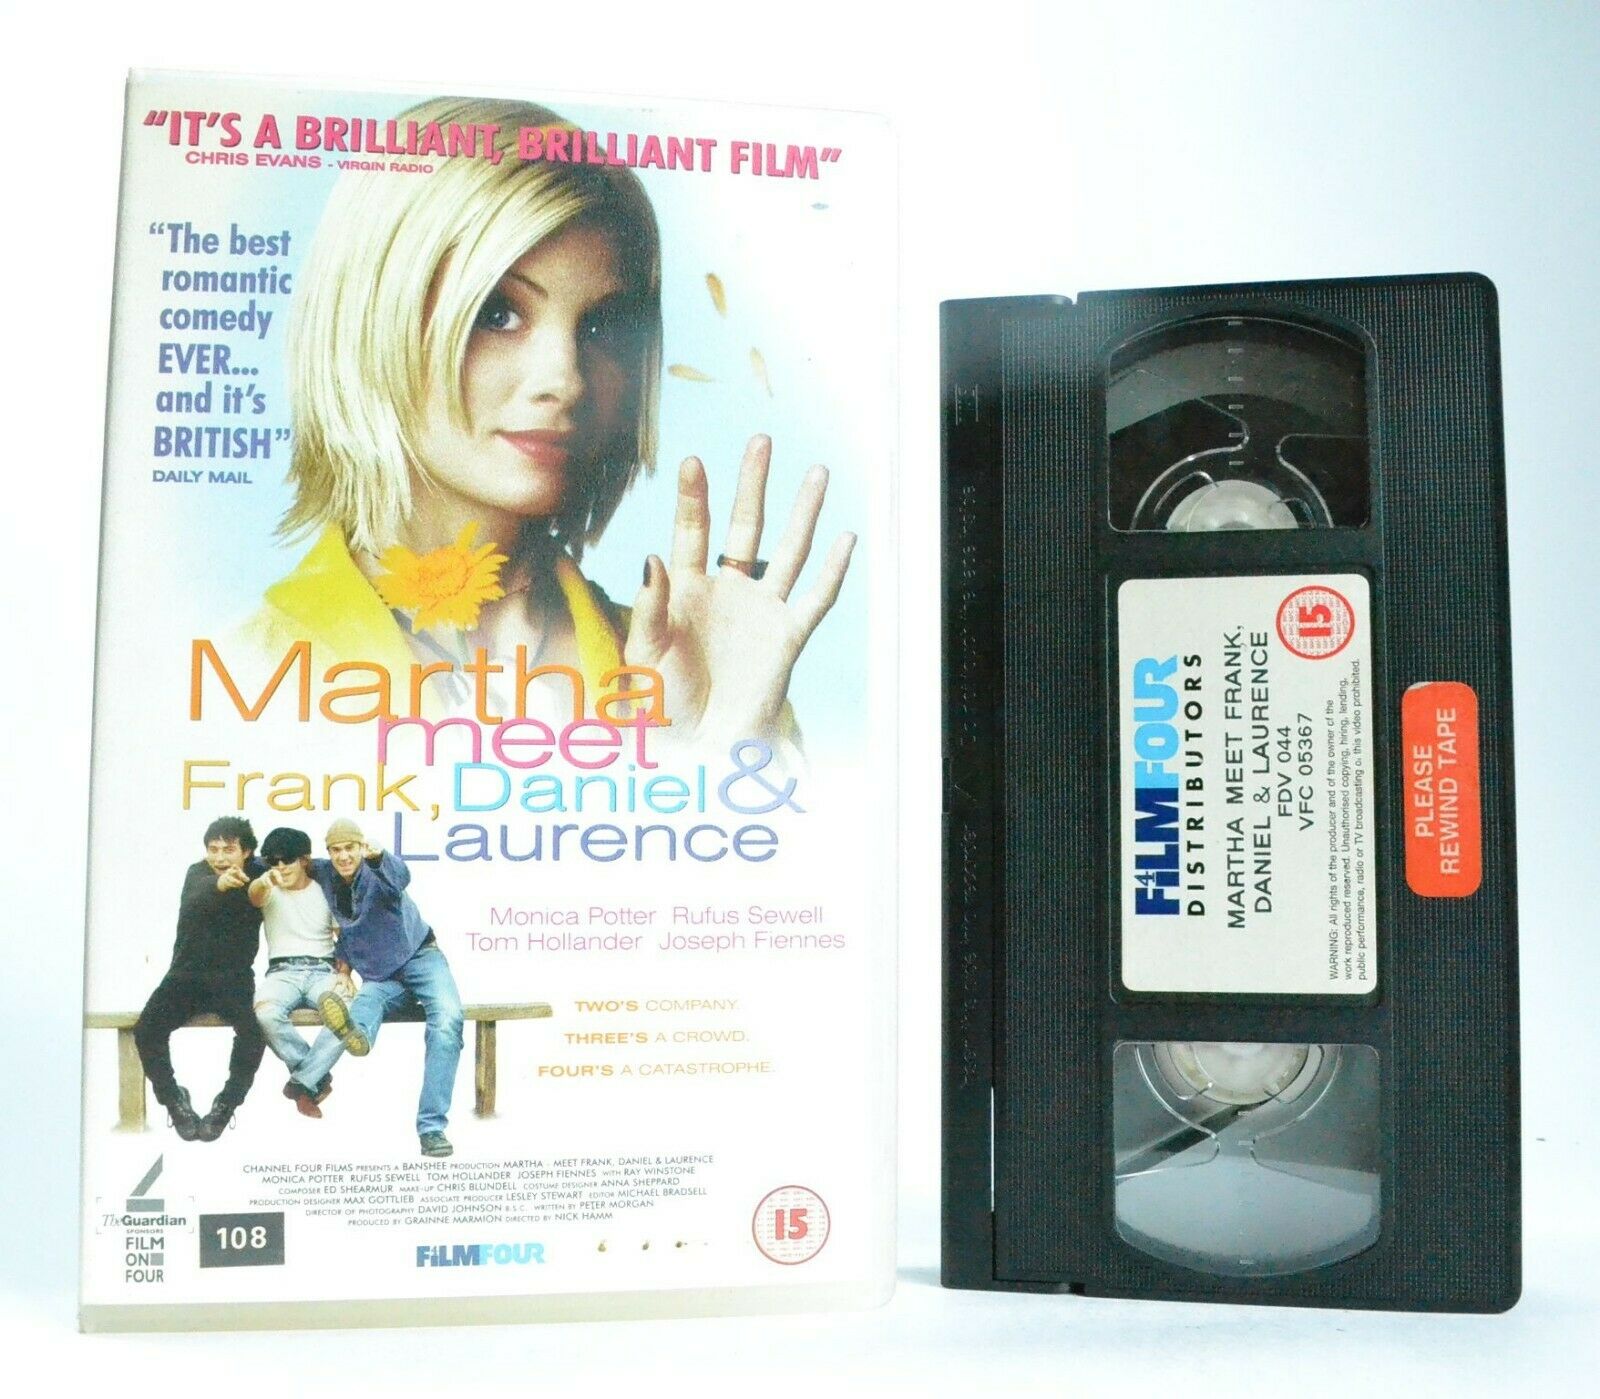 Martha Meet Frank, Daniel And Laurence: Romantic Comedy (1998) - Large Box - VHS-